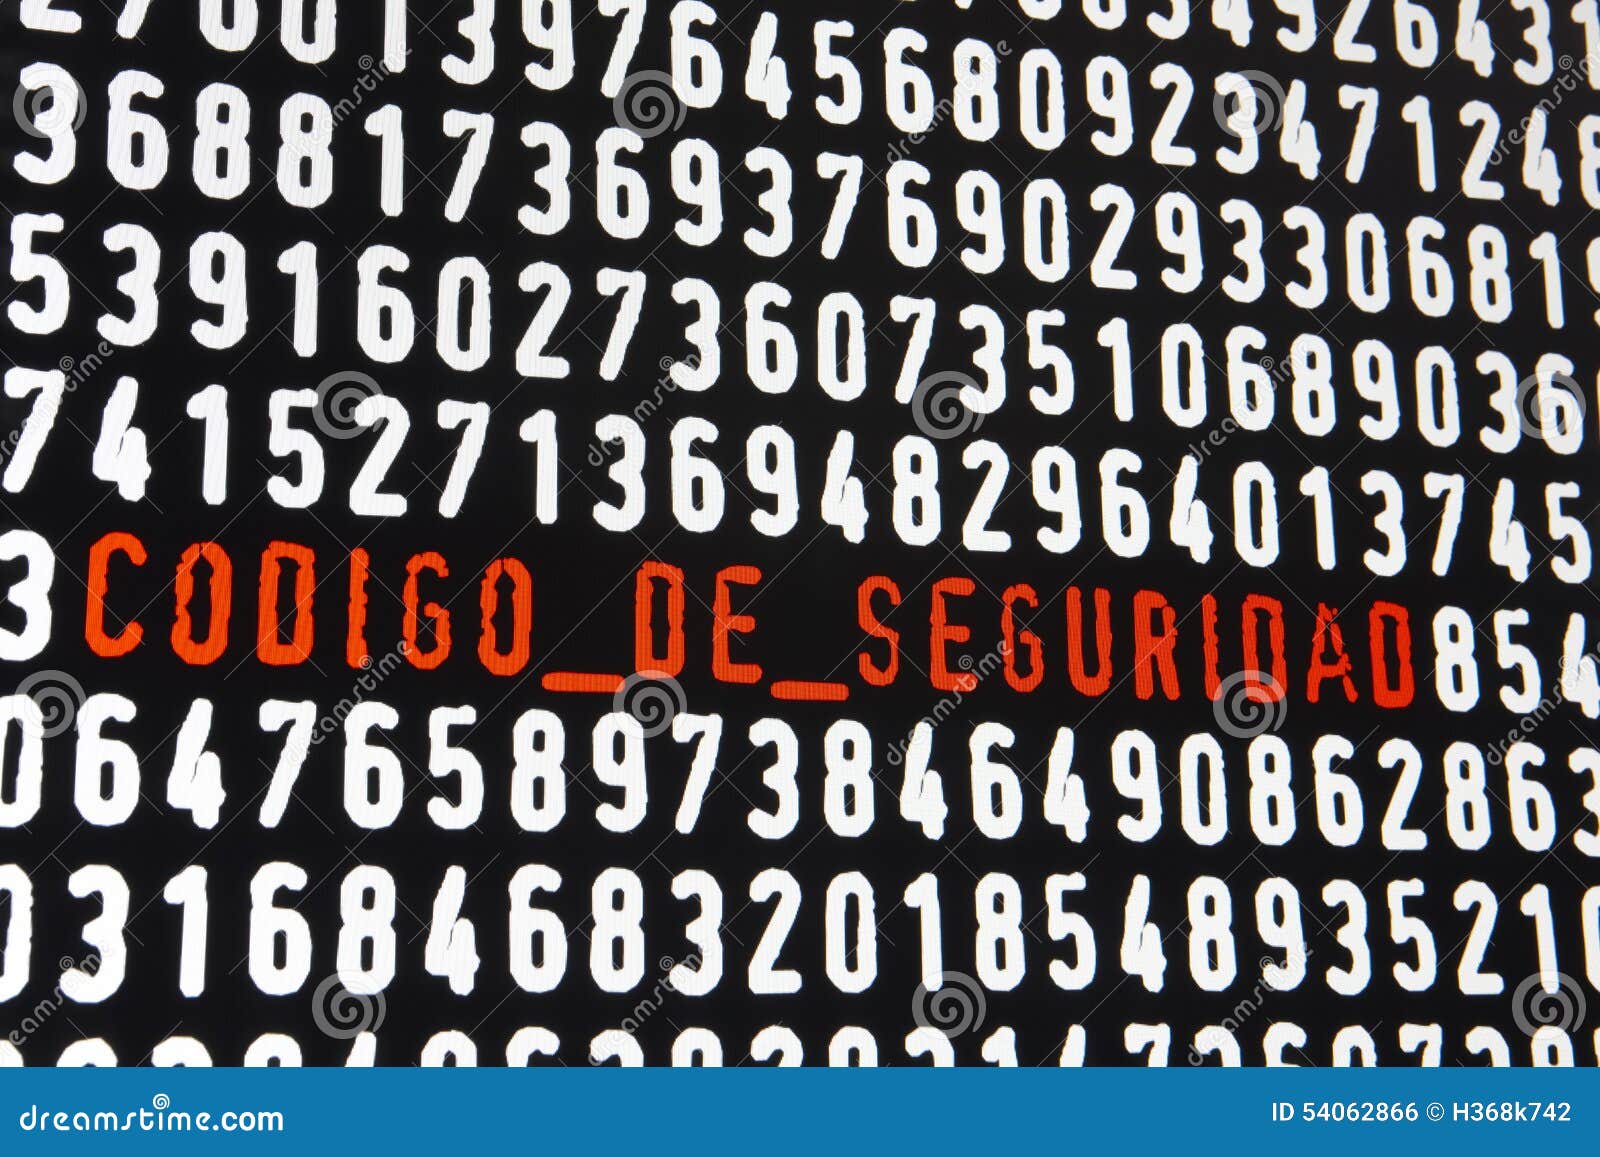 computer screen with codigo de seguridad text on black background